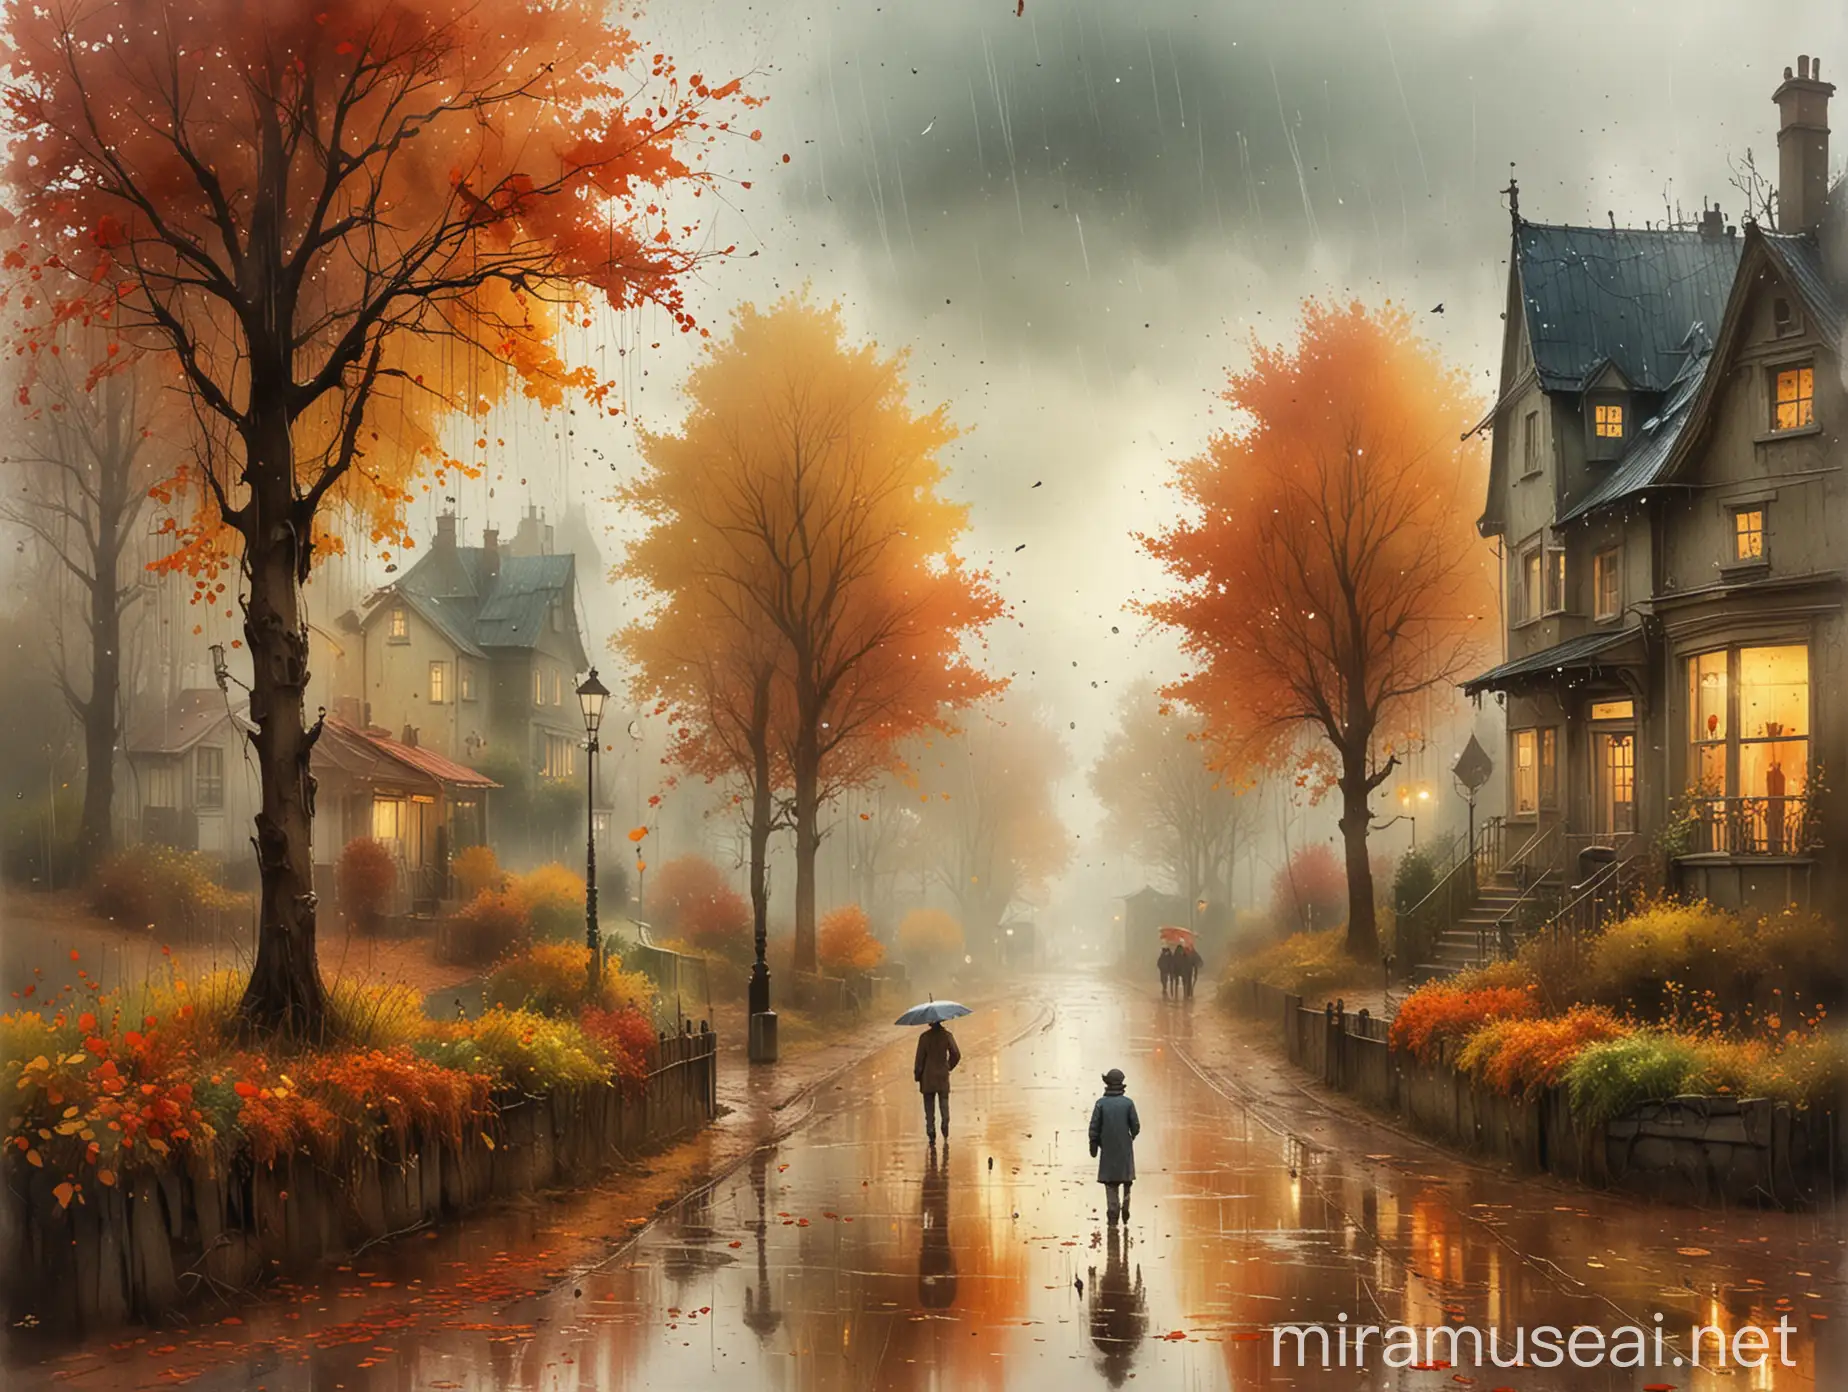 осенний дождь, watercolour style by Alexander Jansson